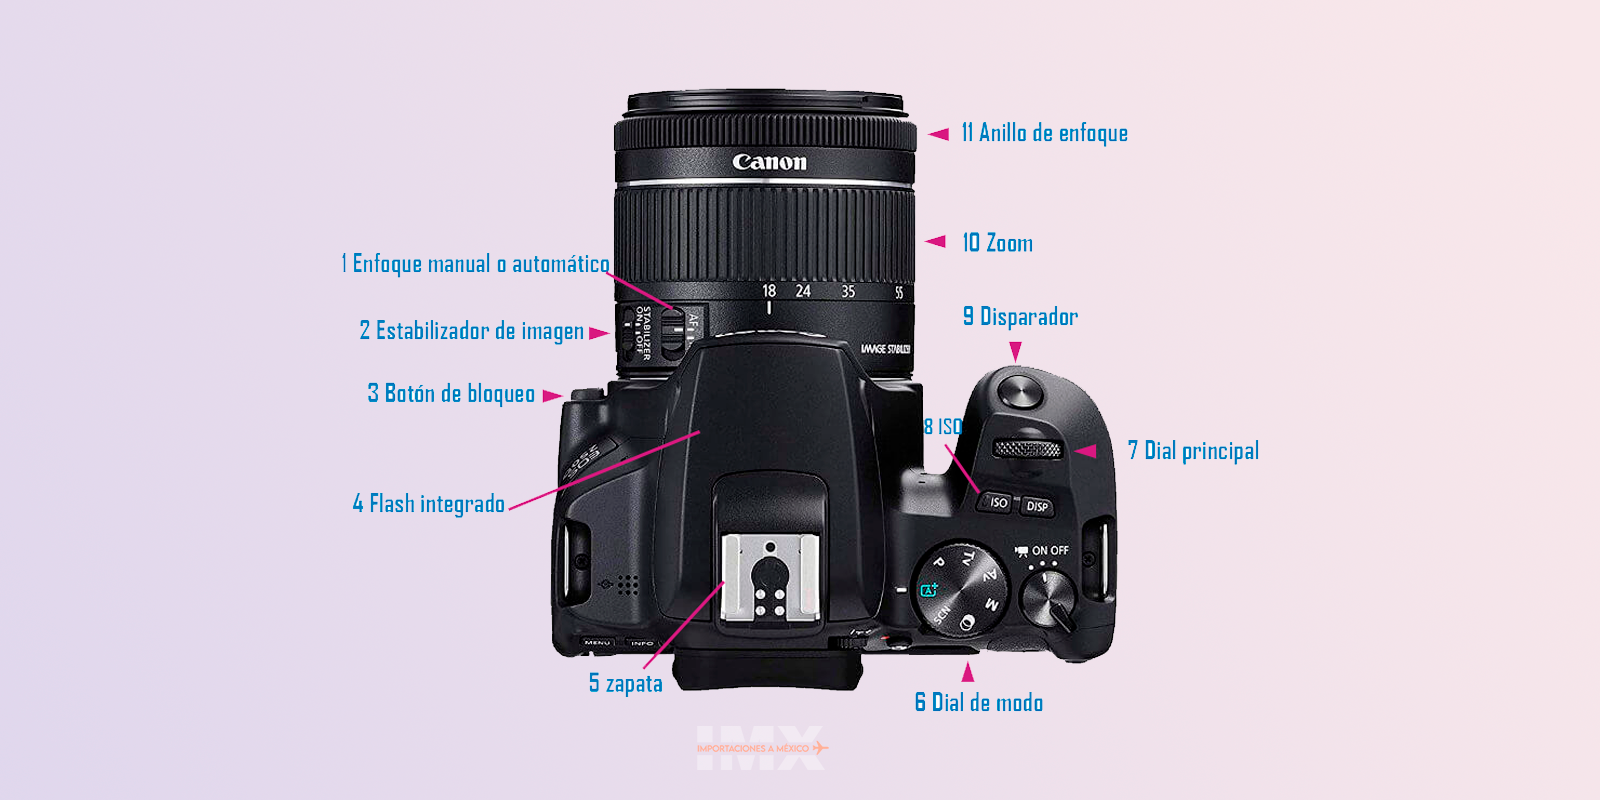 Características de la cámara fotográfica. (A) Cámara Réflex